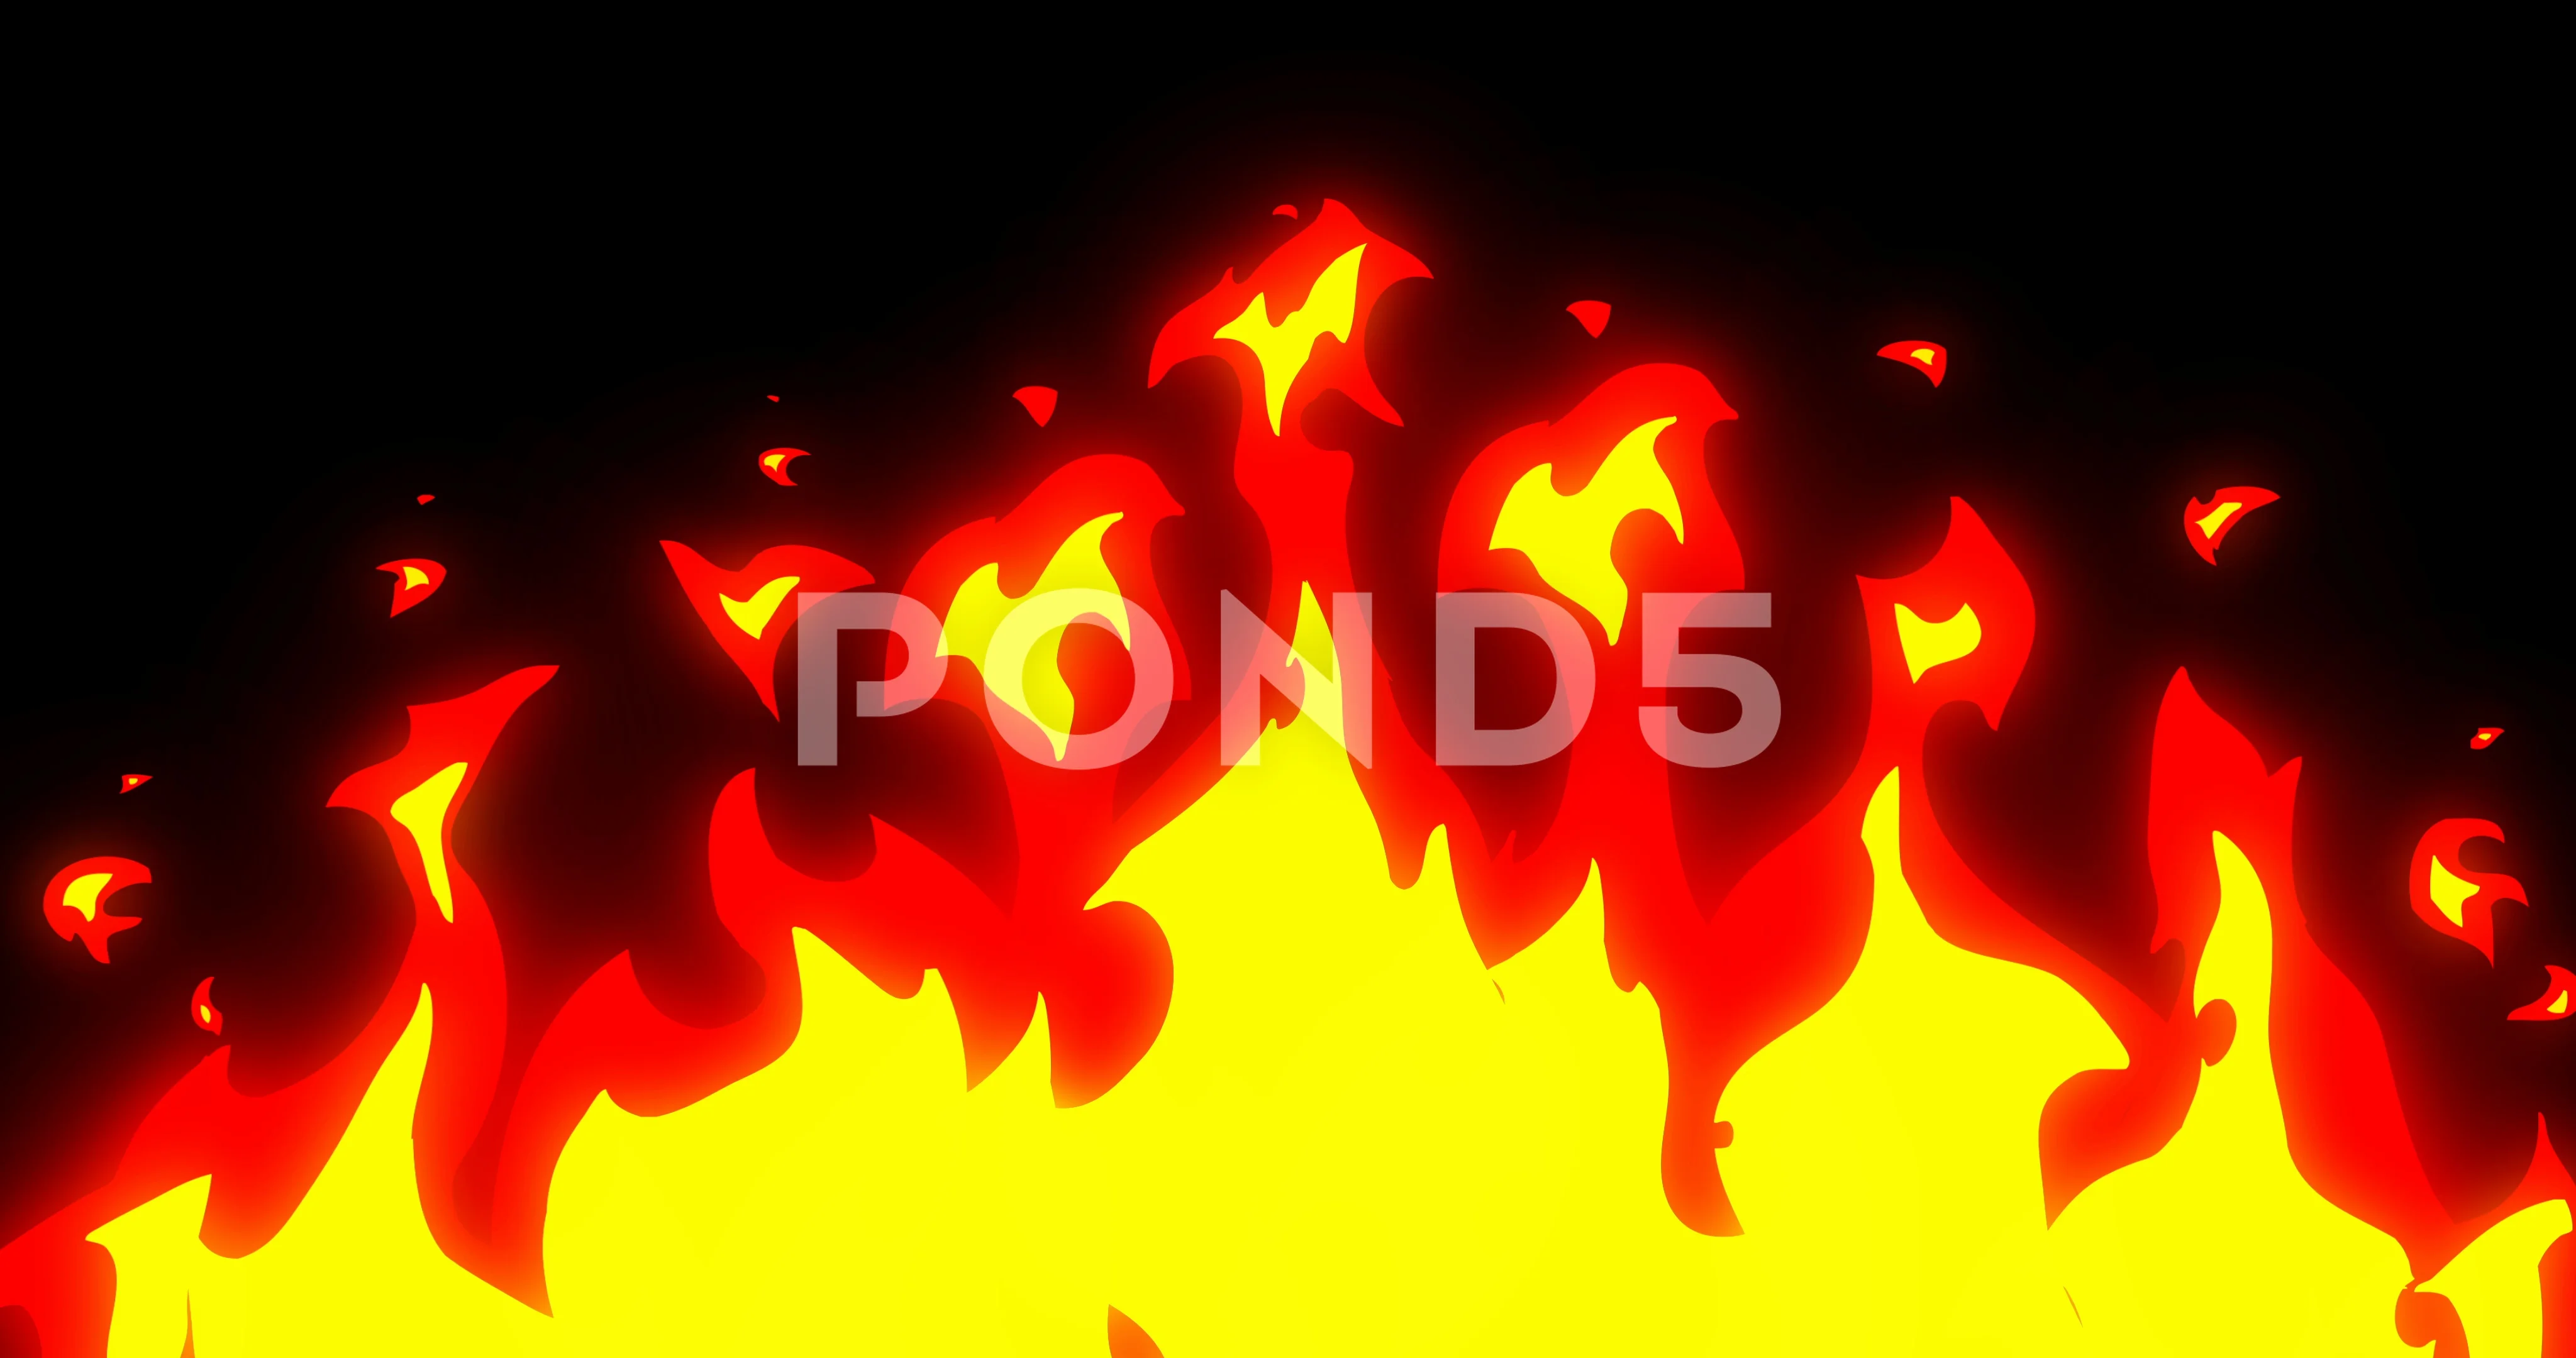 04 - 2D Cartoon Fire Animation 4k Fireba... | Stock Video | Pond5